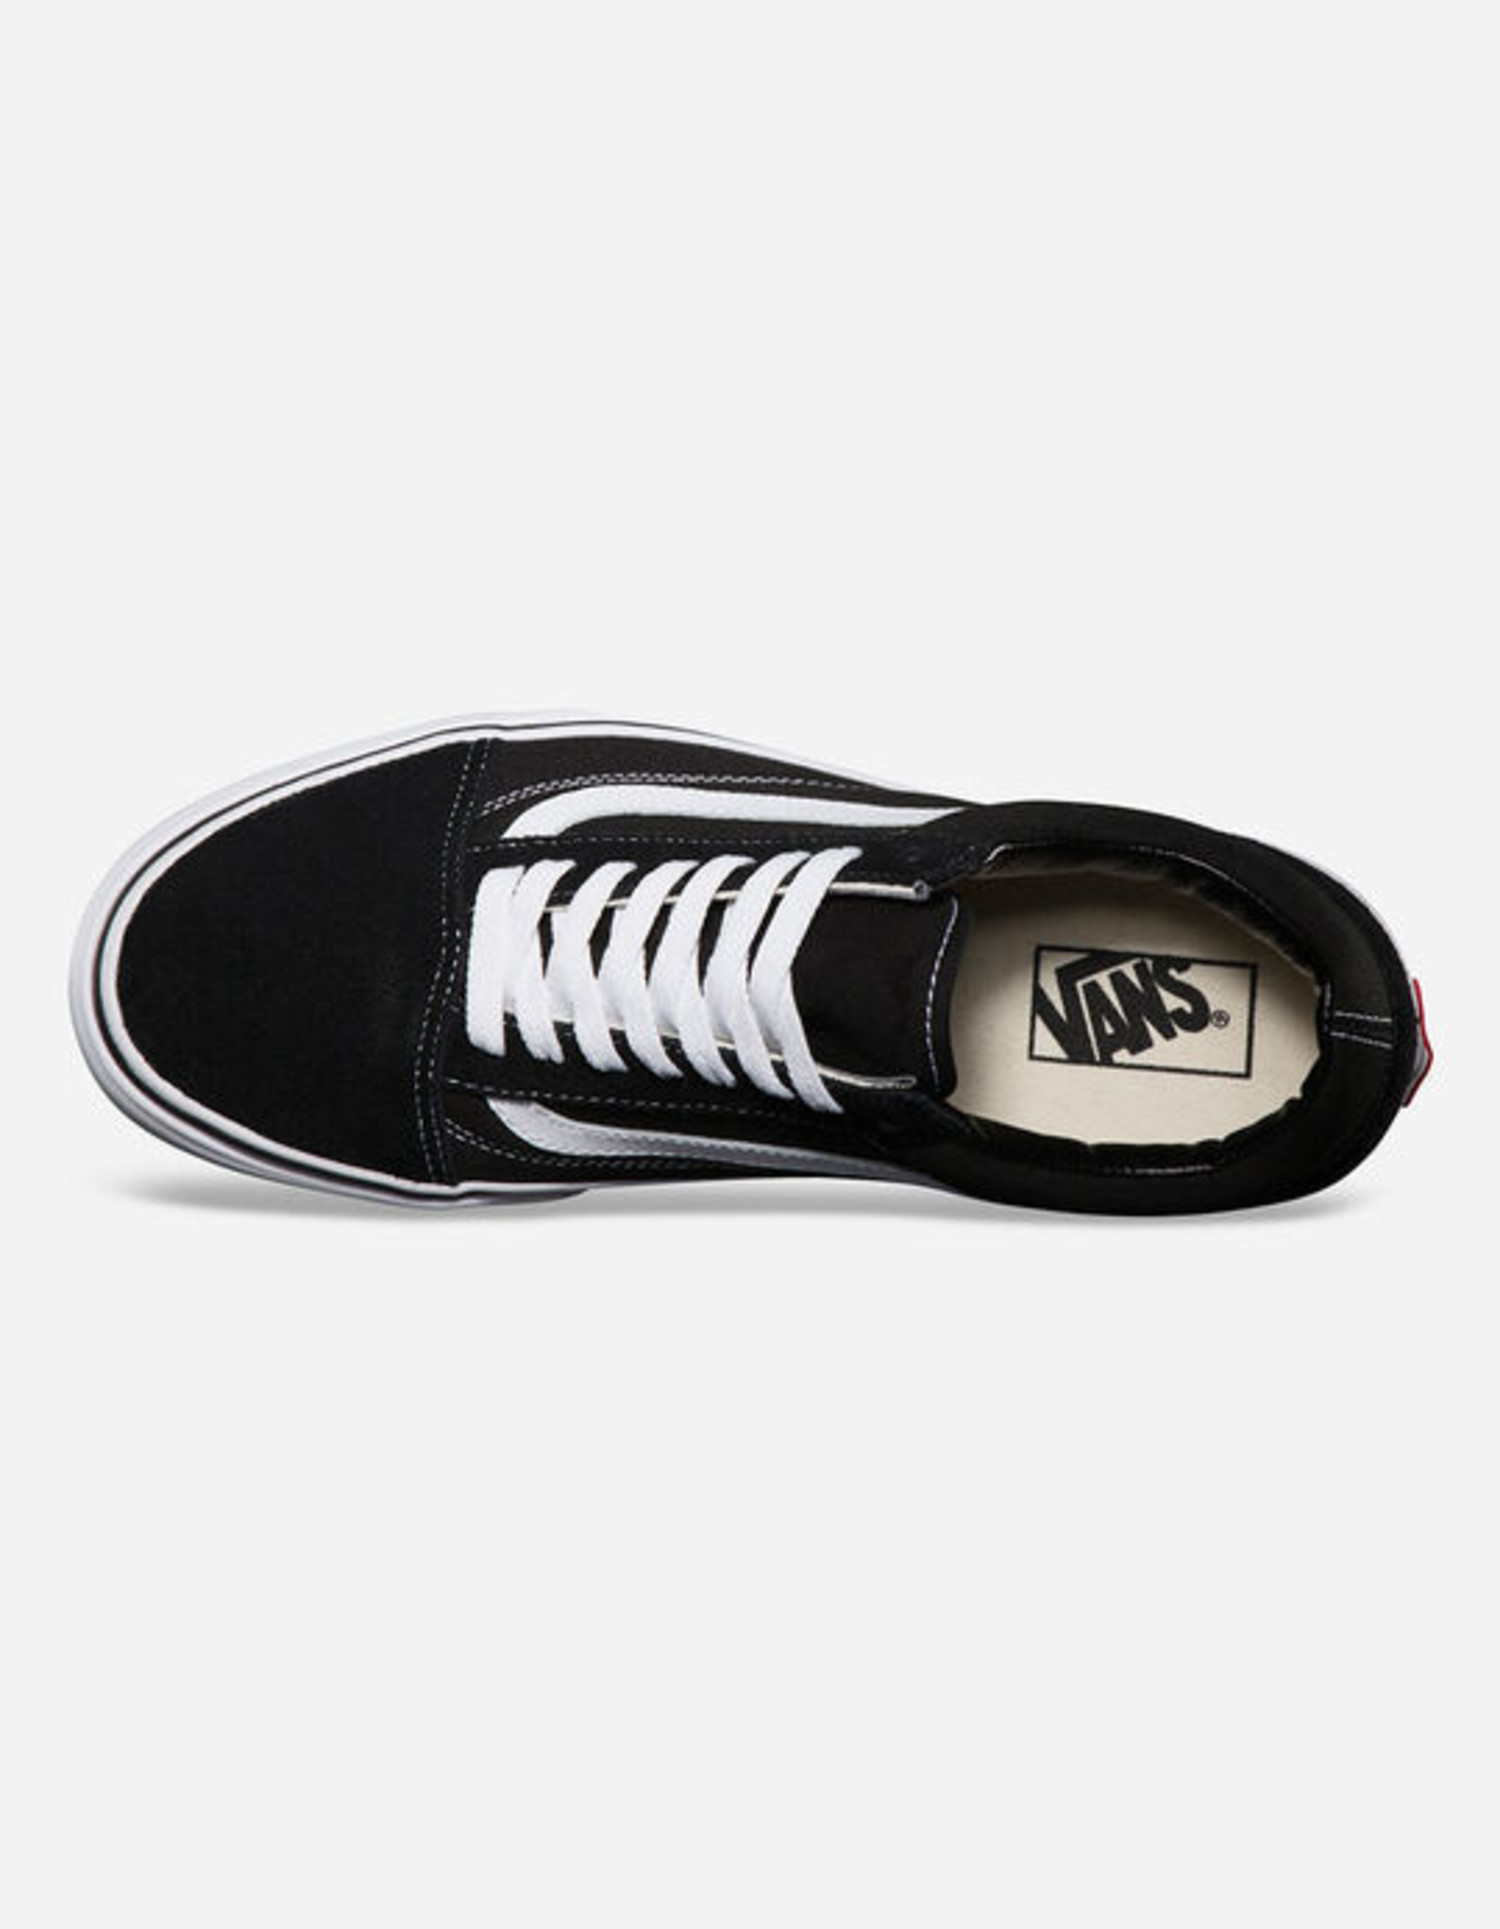 vans old skool black and white skate shoes